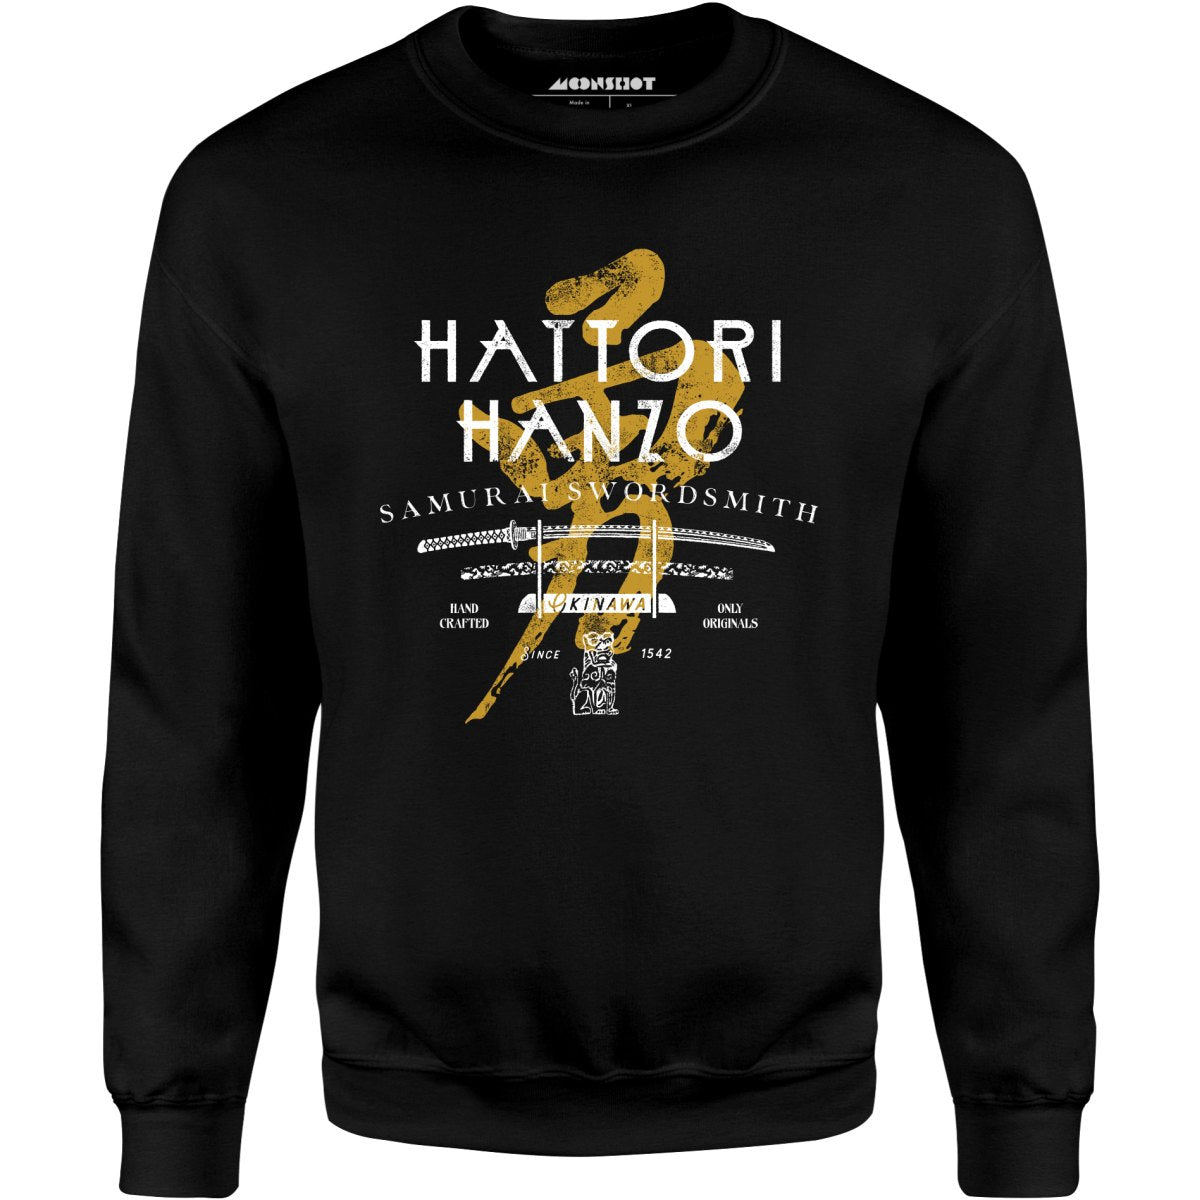 Hattori Hanzo Samurai Swordsmith - Unisex Sweatshirt